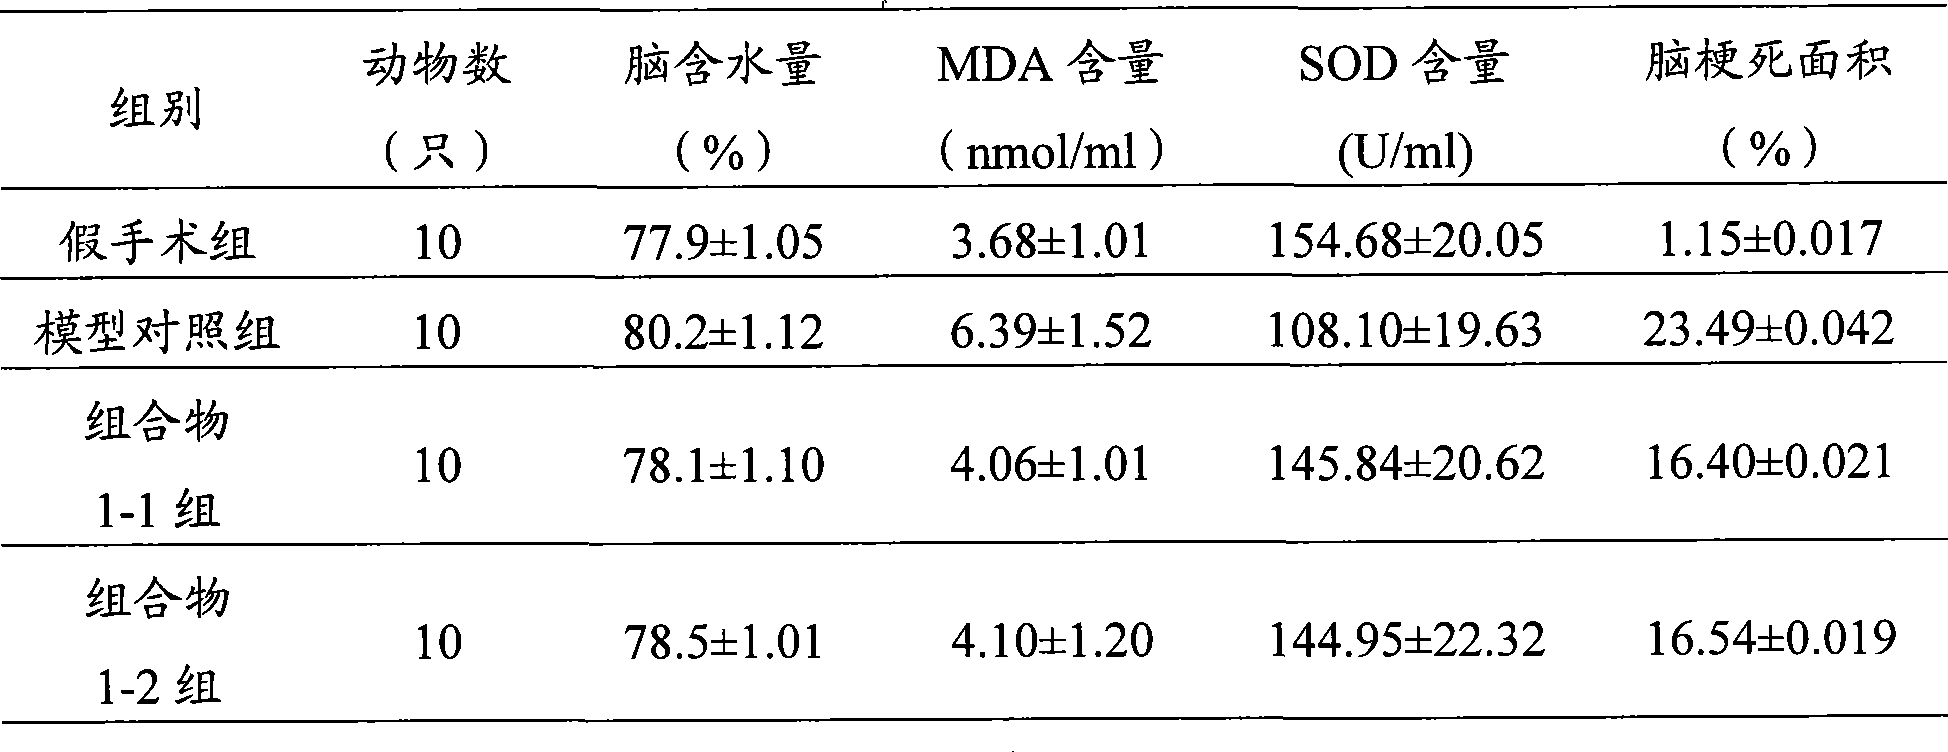 Medicine composition of Panax notoginseng saponins